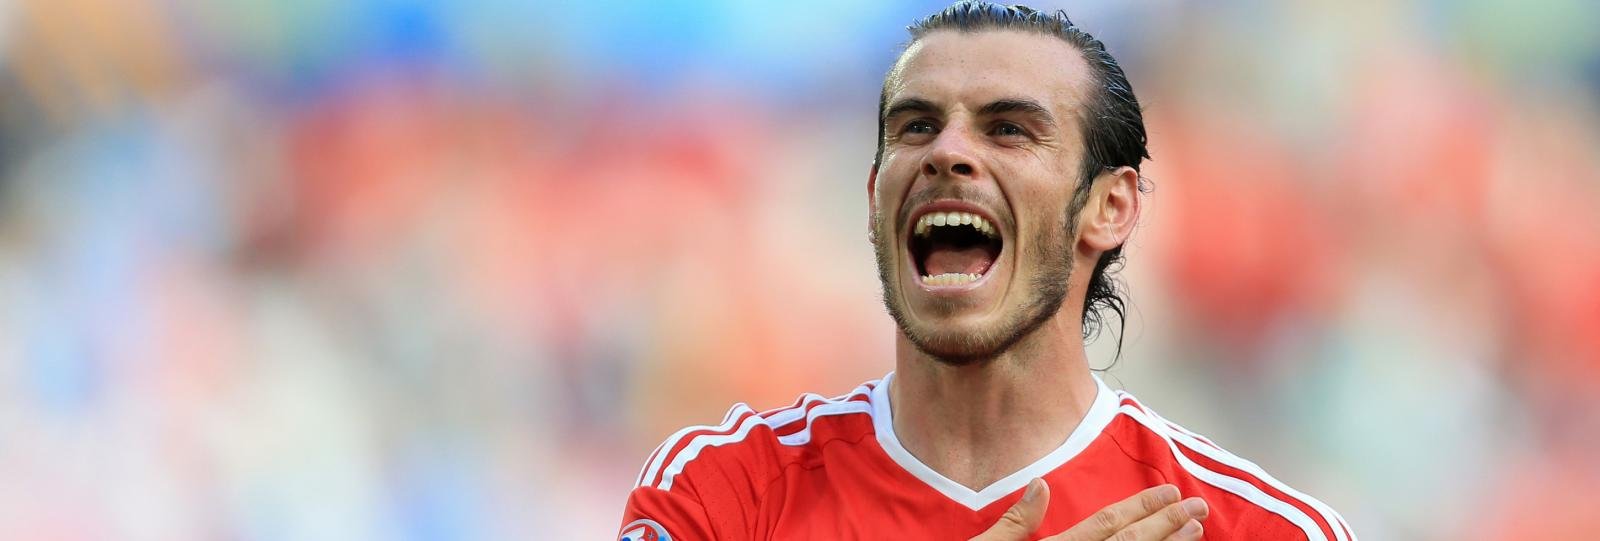 EURO 2016 Profile: Wales’ Galactico, Gareth Bale